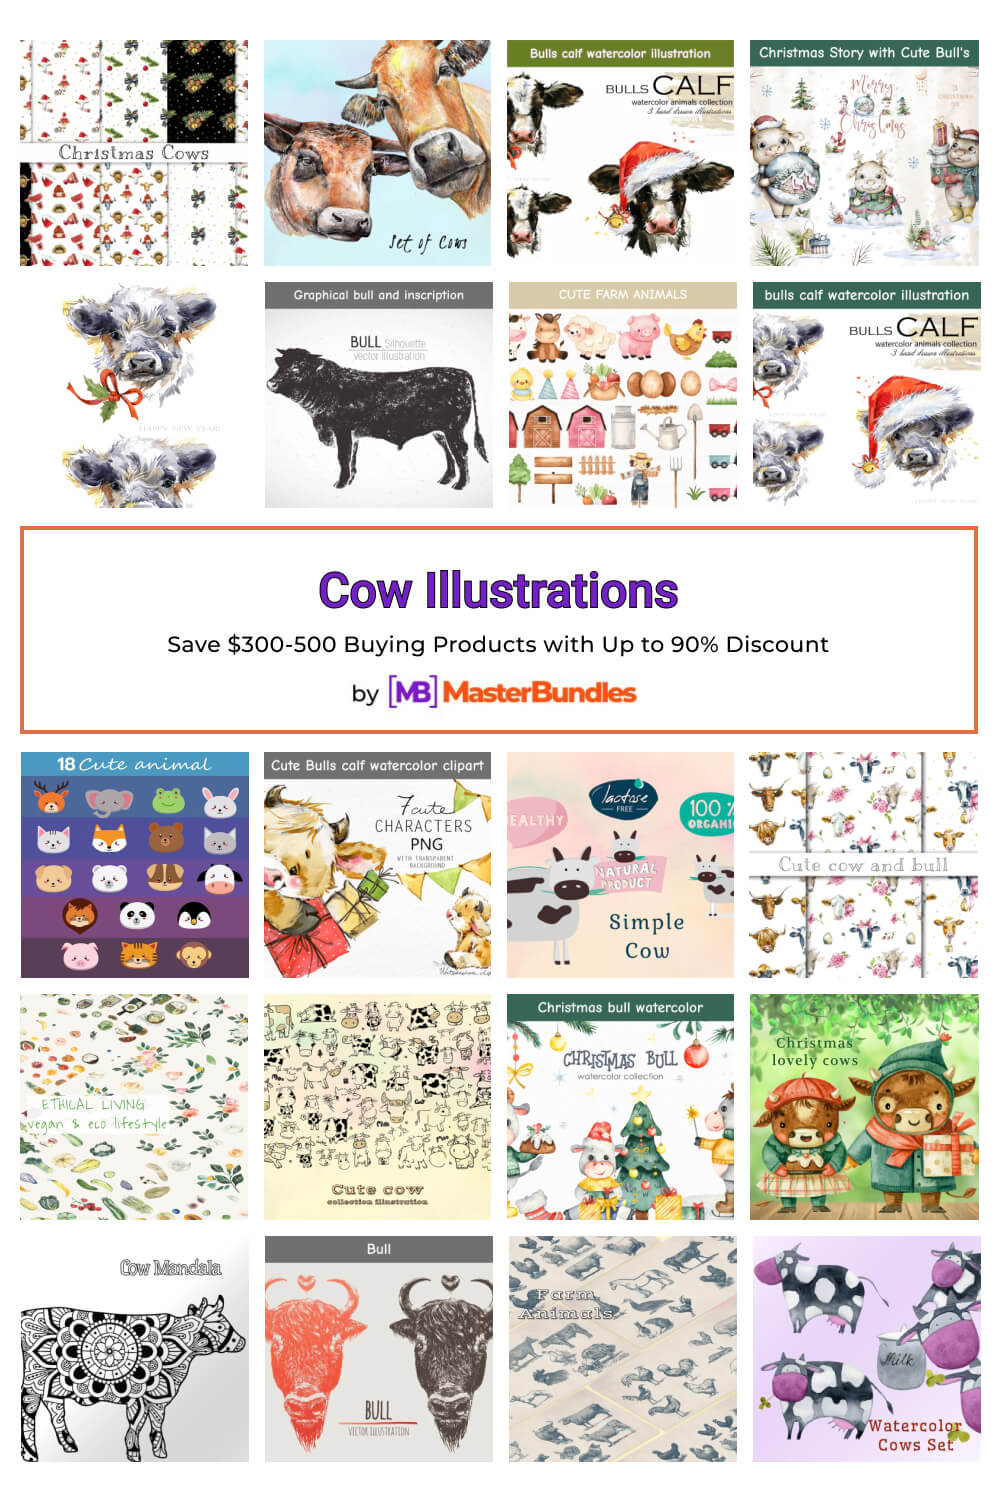 cow illustrations pinterest image.